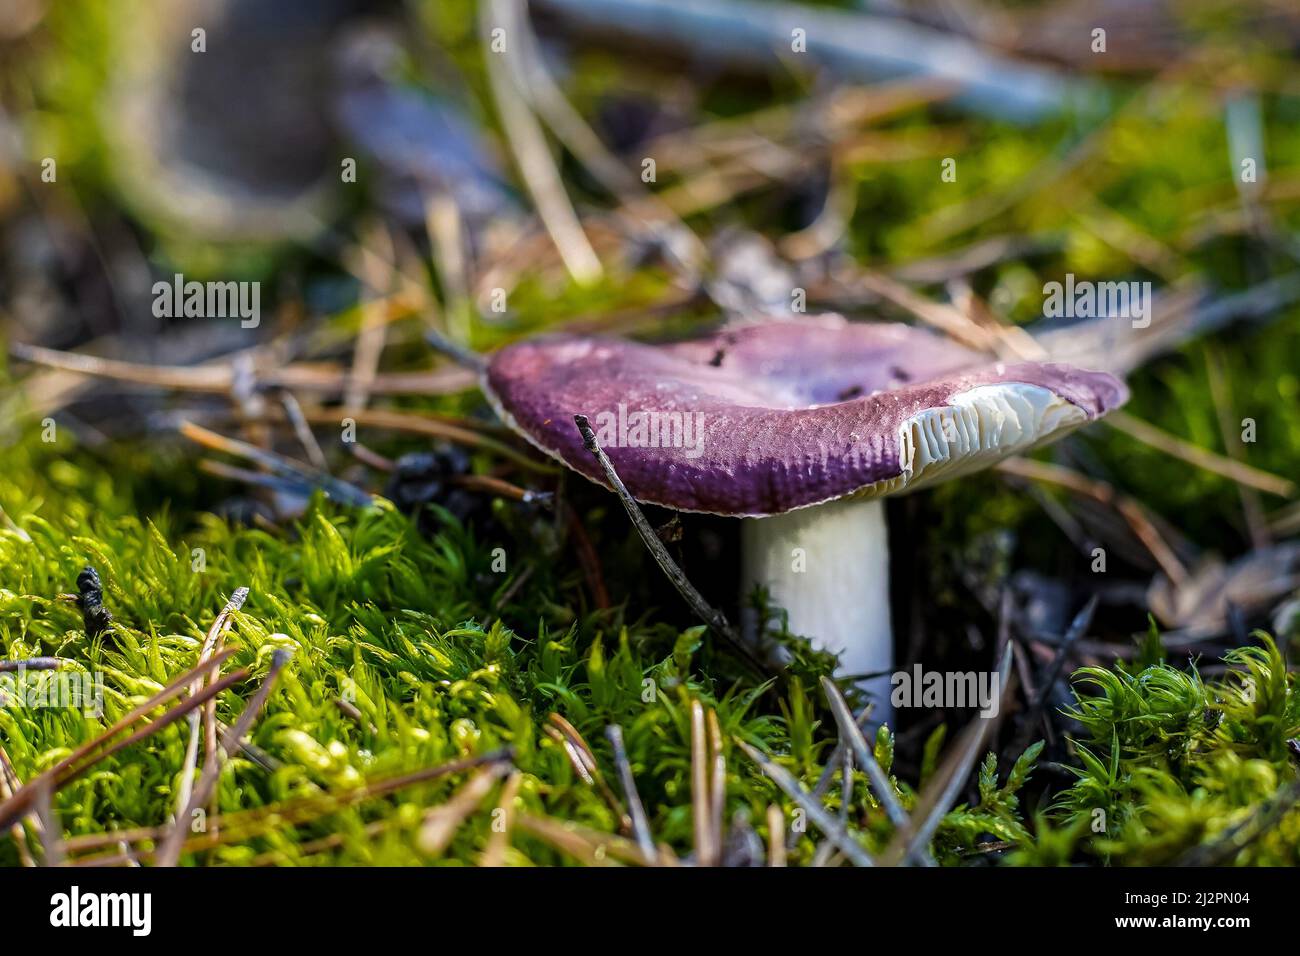 Täubling mit violettem Hut. Boletus wachsen. Essbare Pilze Hintergrund. Wald im Herbst. Naturverfall. Sammelt Pilze. Pilz. Stockfoto